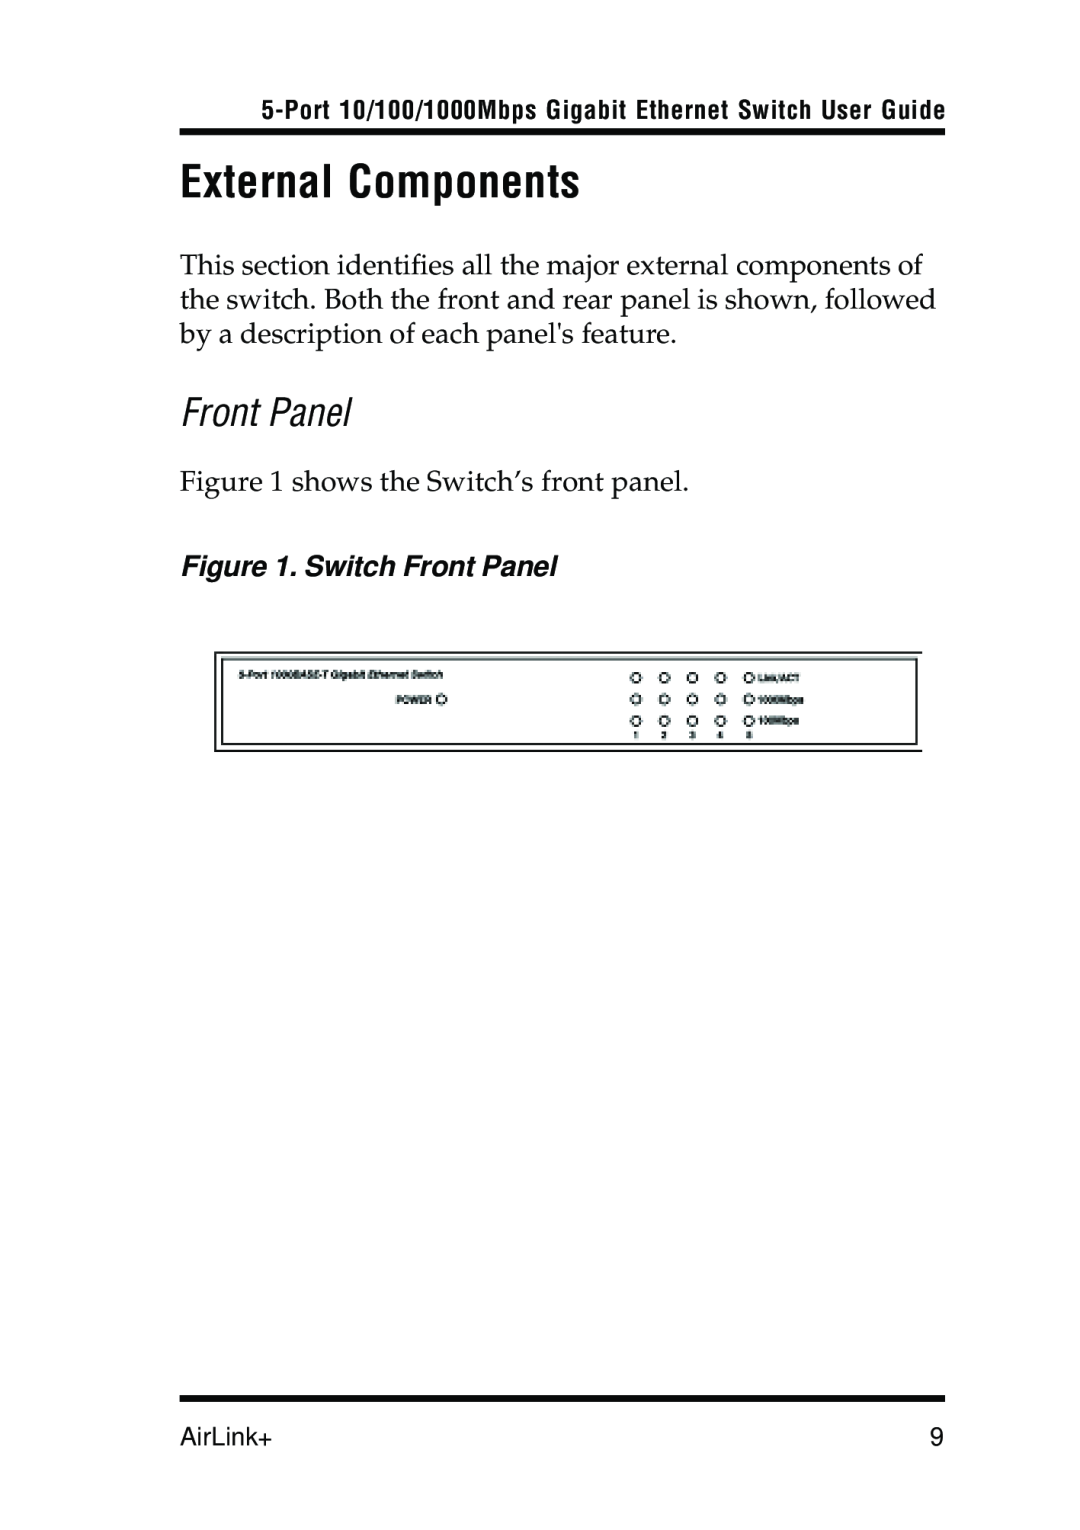 Airlink 5-Port manual External Components, Switch Front Panel, Port 10/100/1000Mbps Gigabit Ethernet Switch User Guide 